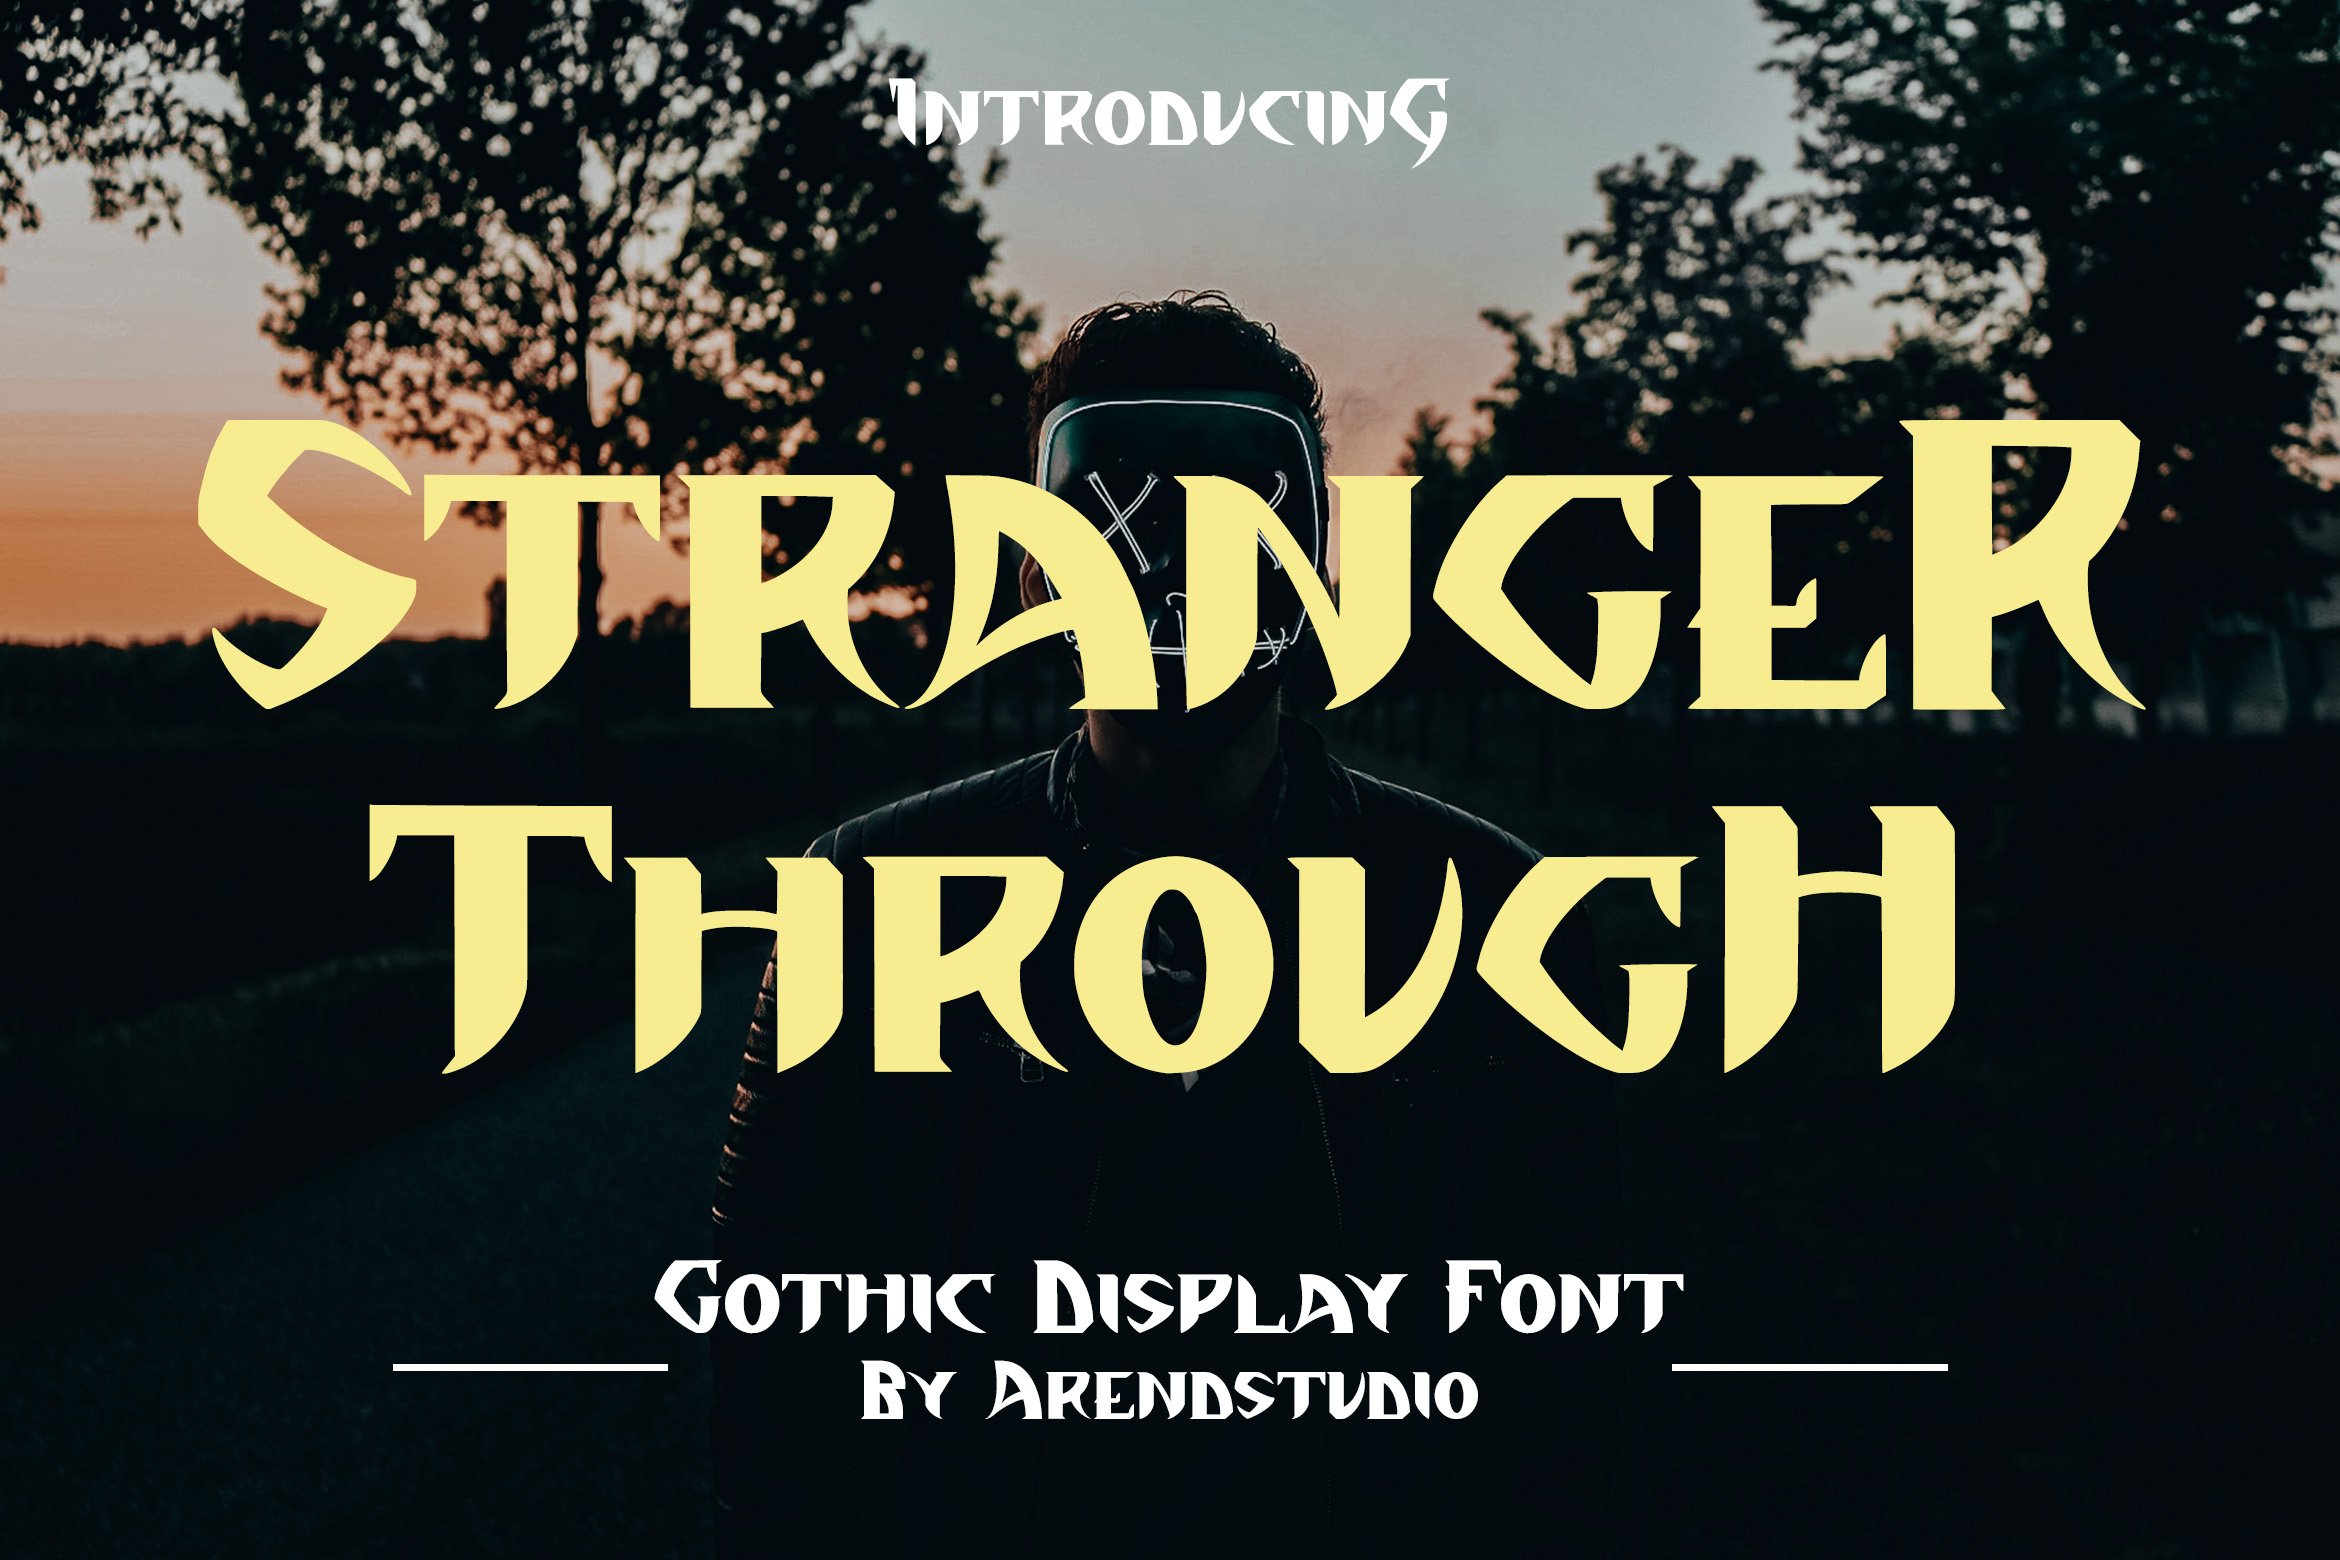 Stranger Through - Gothic Display cover image.